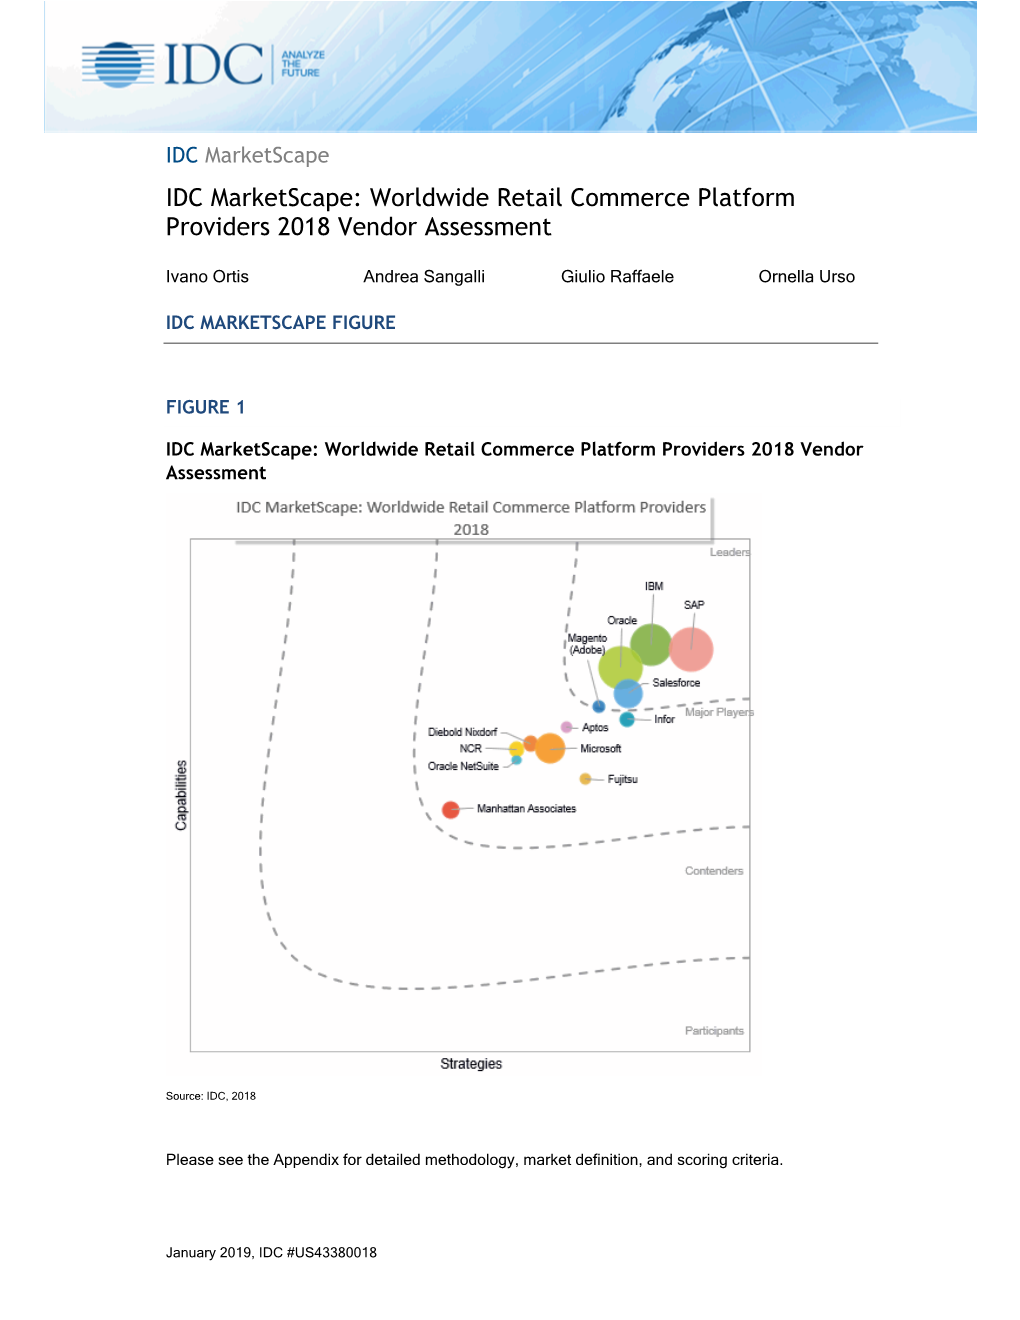 IDC Marketscape: Worldwide Retail Commerce Platform Providers 2018 Vendor Assessment